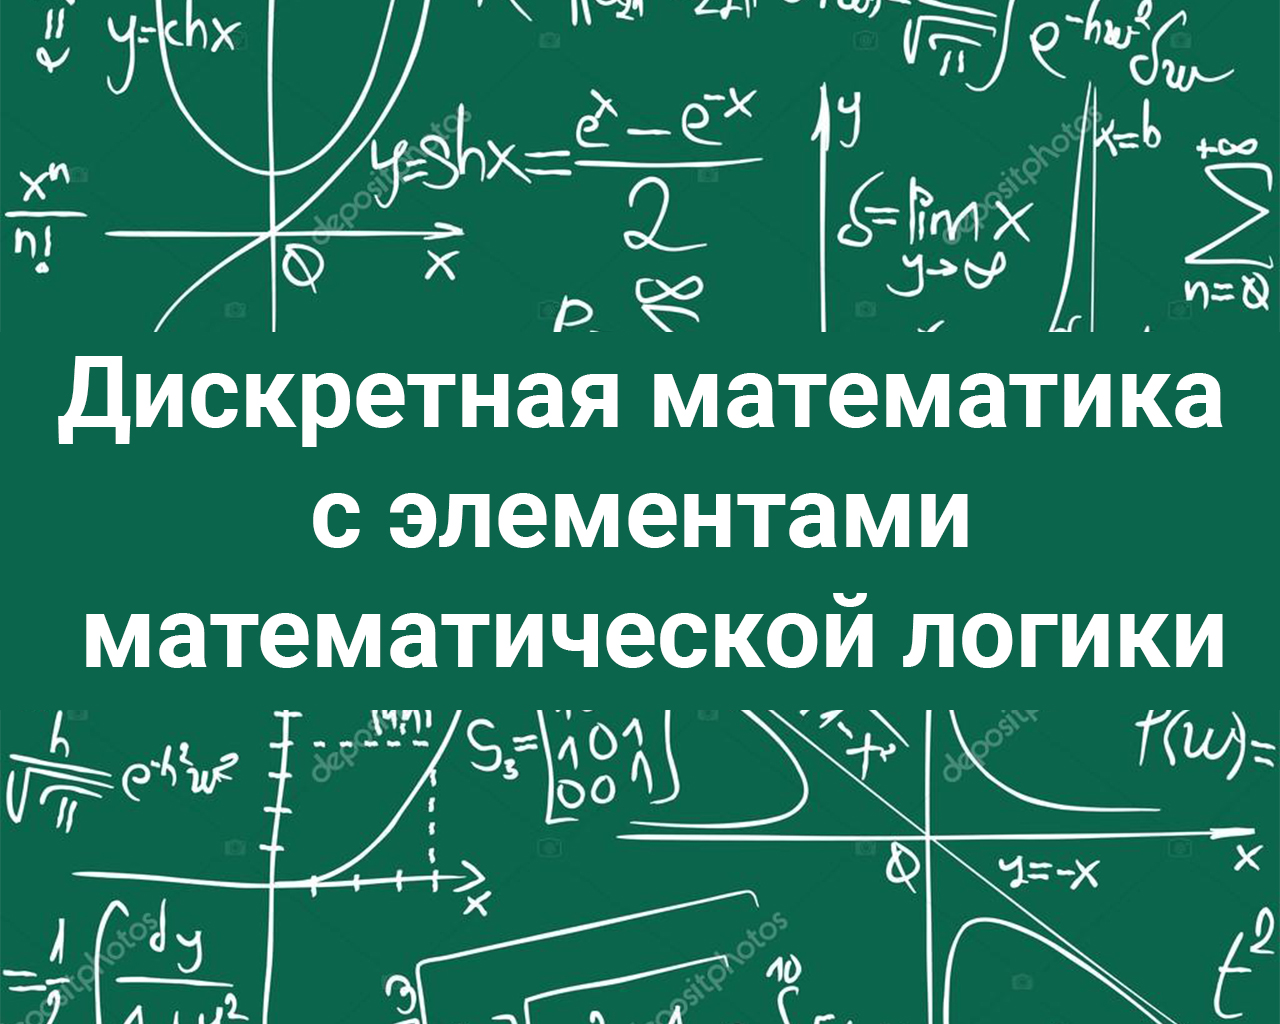 Дискретная математика с элементами математической логики (Фокина Н.В.)